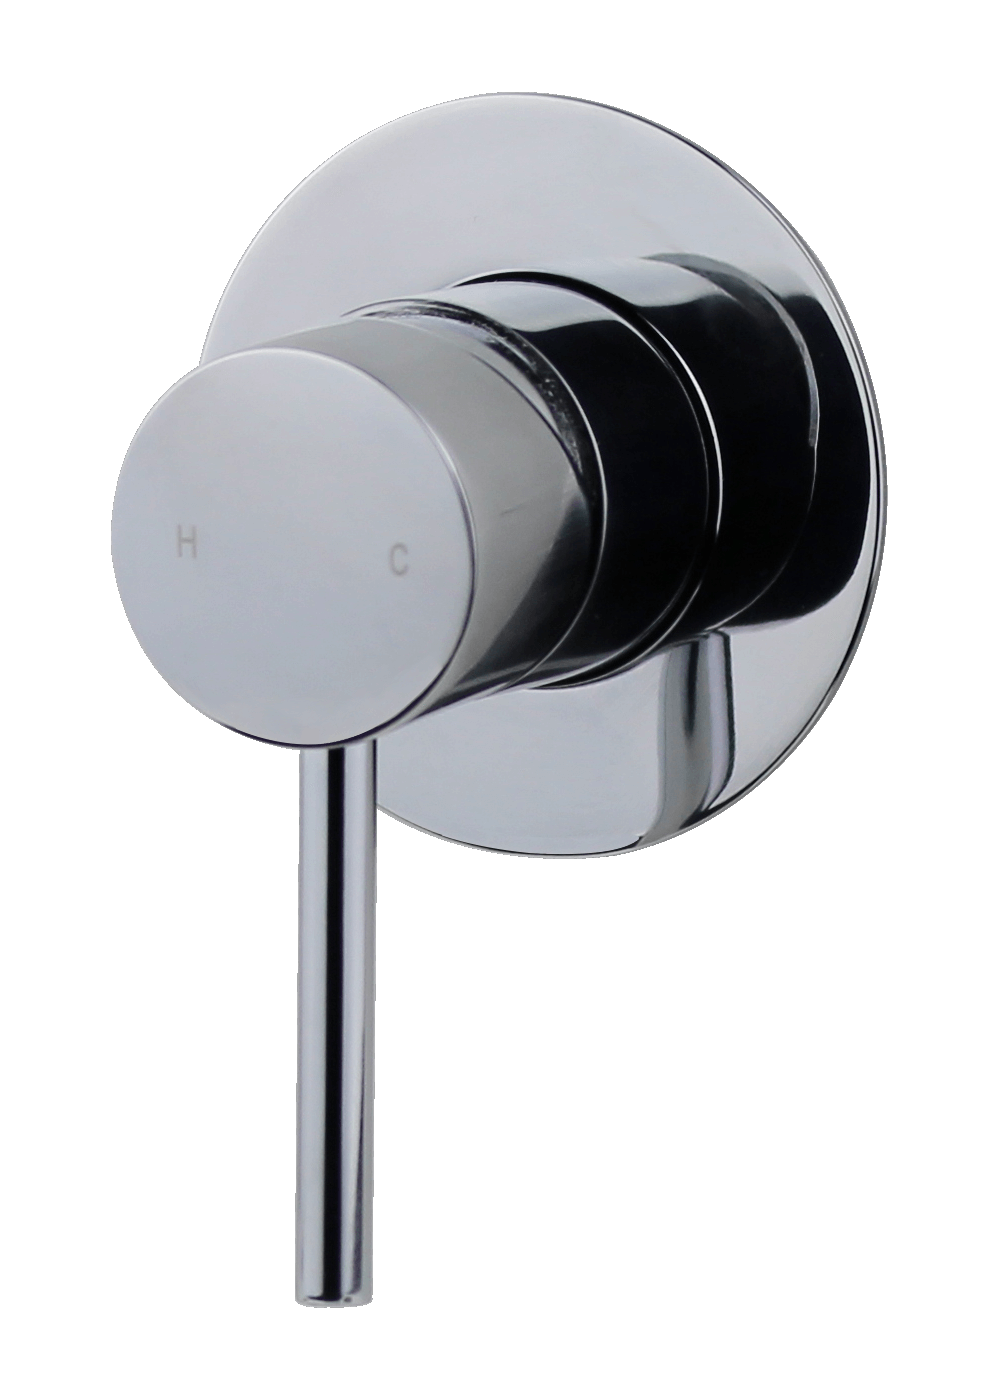 Brasshards Anise Shower Mixer Bathroom Tap Chrome 11SL752C